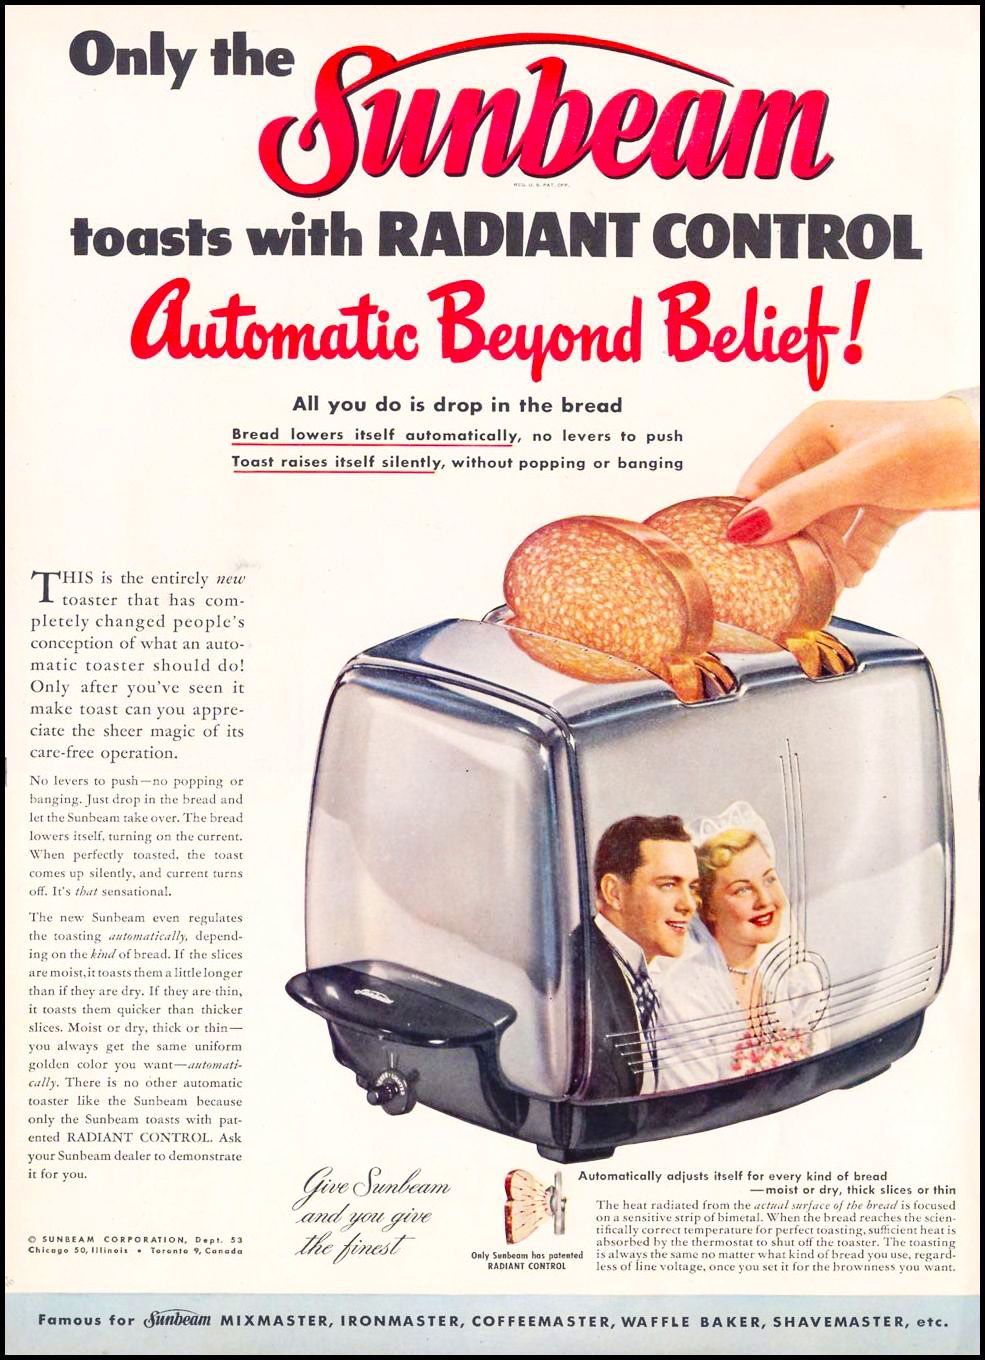 Here's the thing: Sunbeam toaster